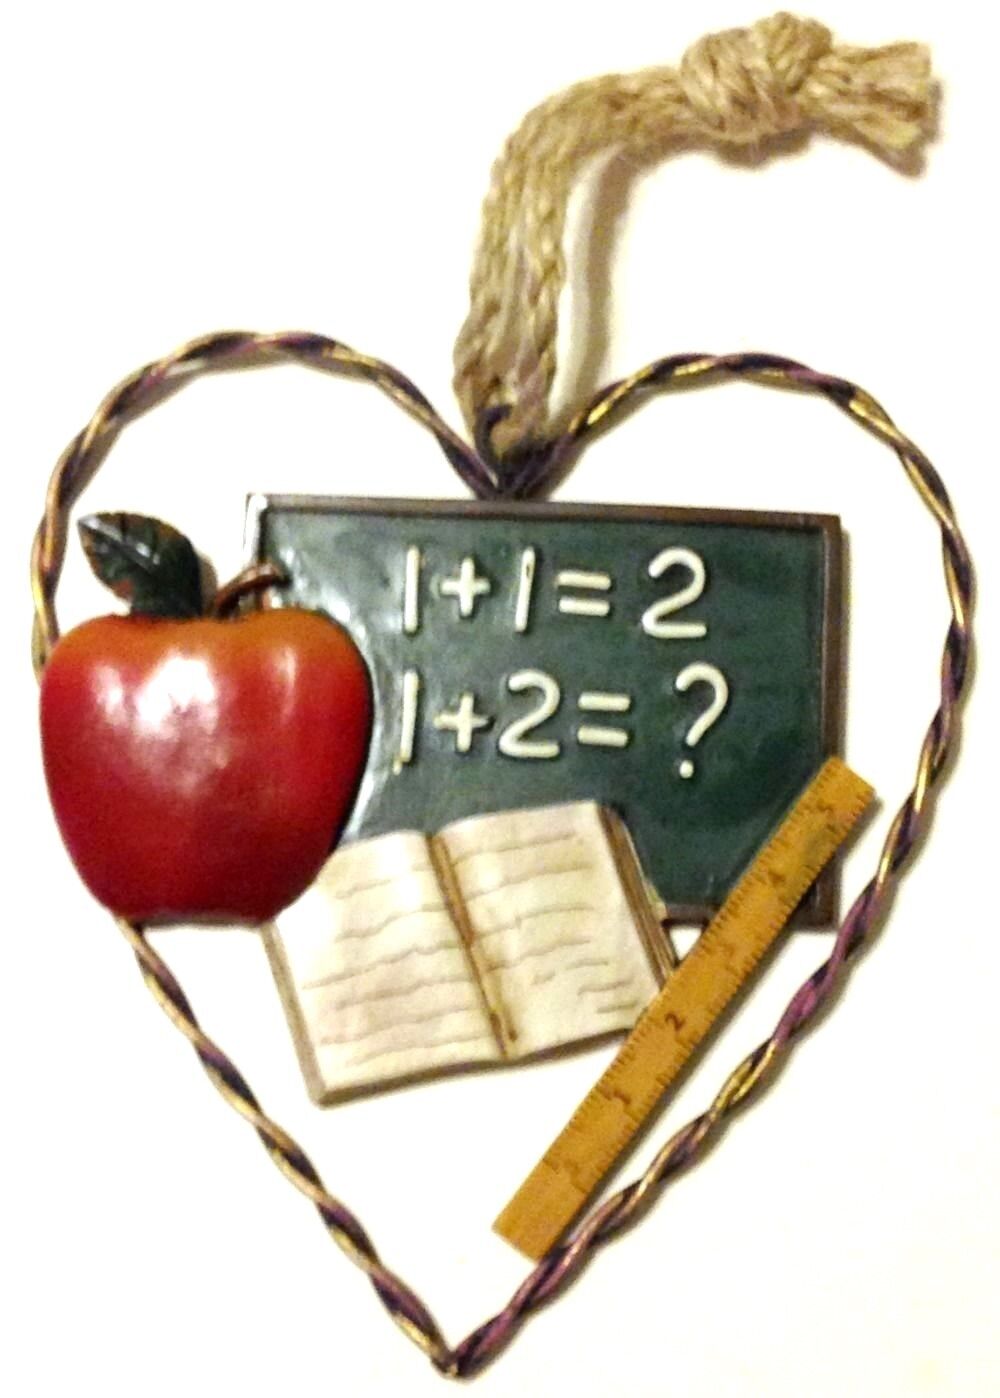 Heart Teacher Apple 1+1 Chalkboard New 7x6 1/2in Polyresin & Wire Wall Hanging